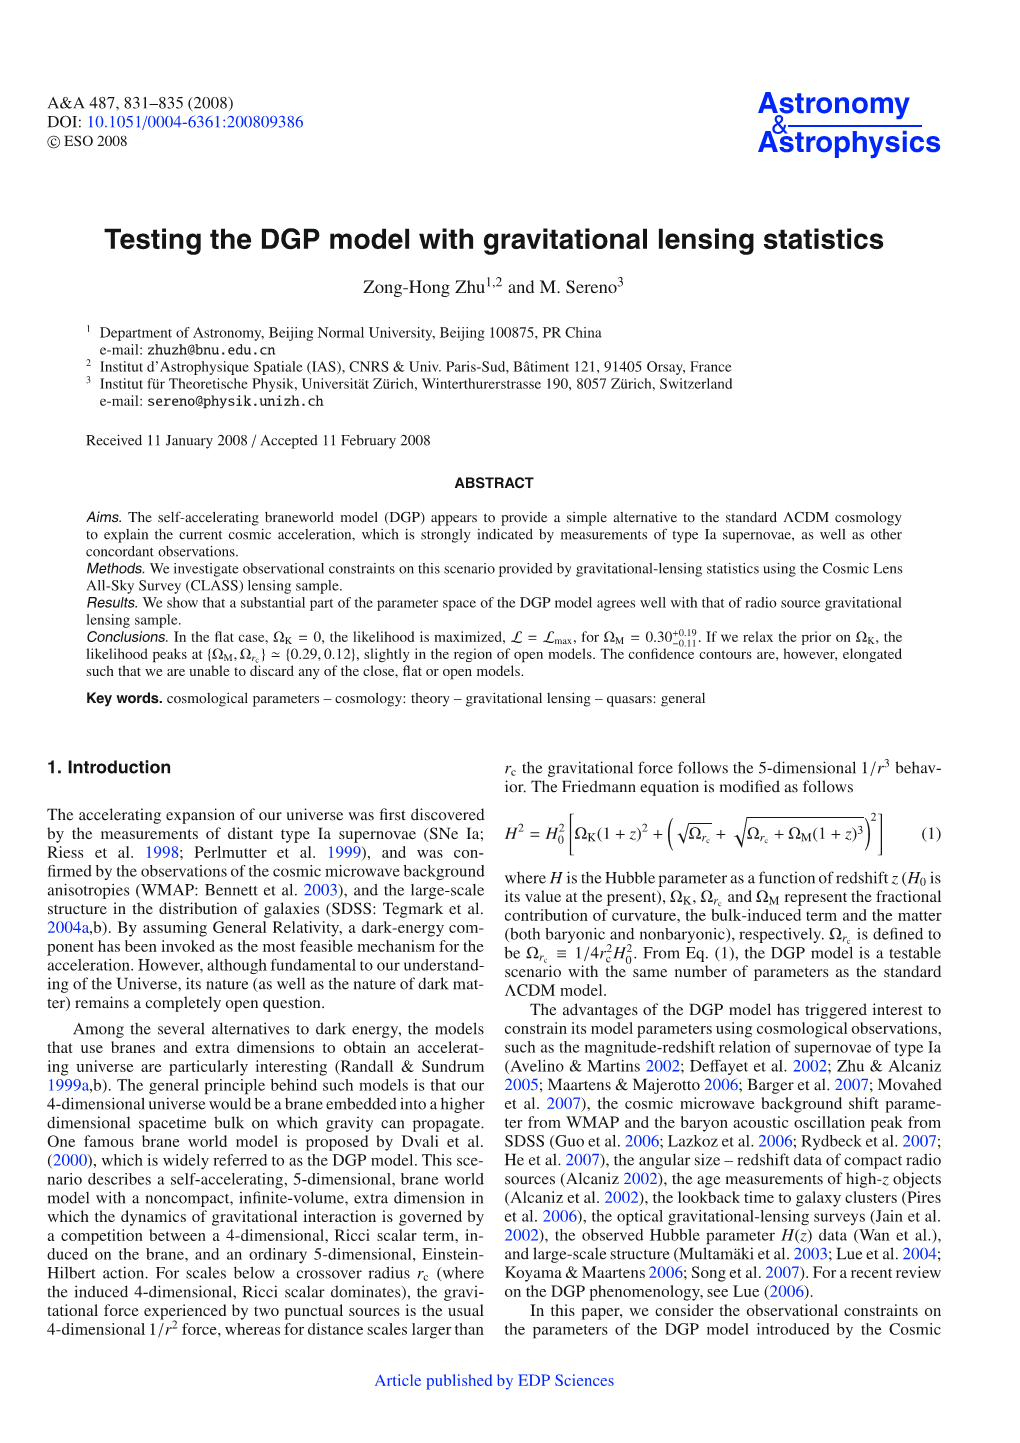 Testing the DGP Model with Gravitational Lensing Statistics